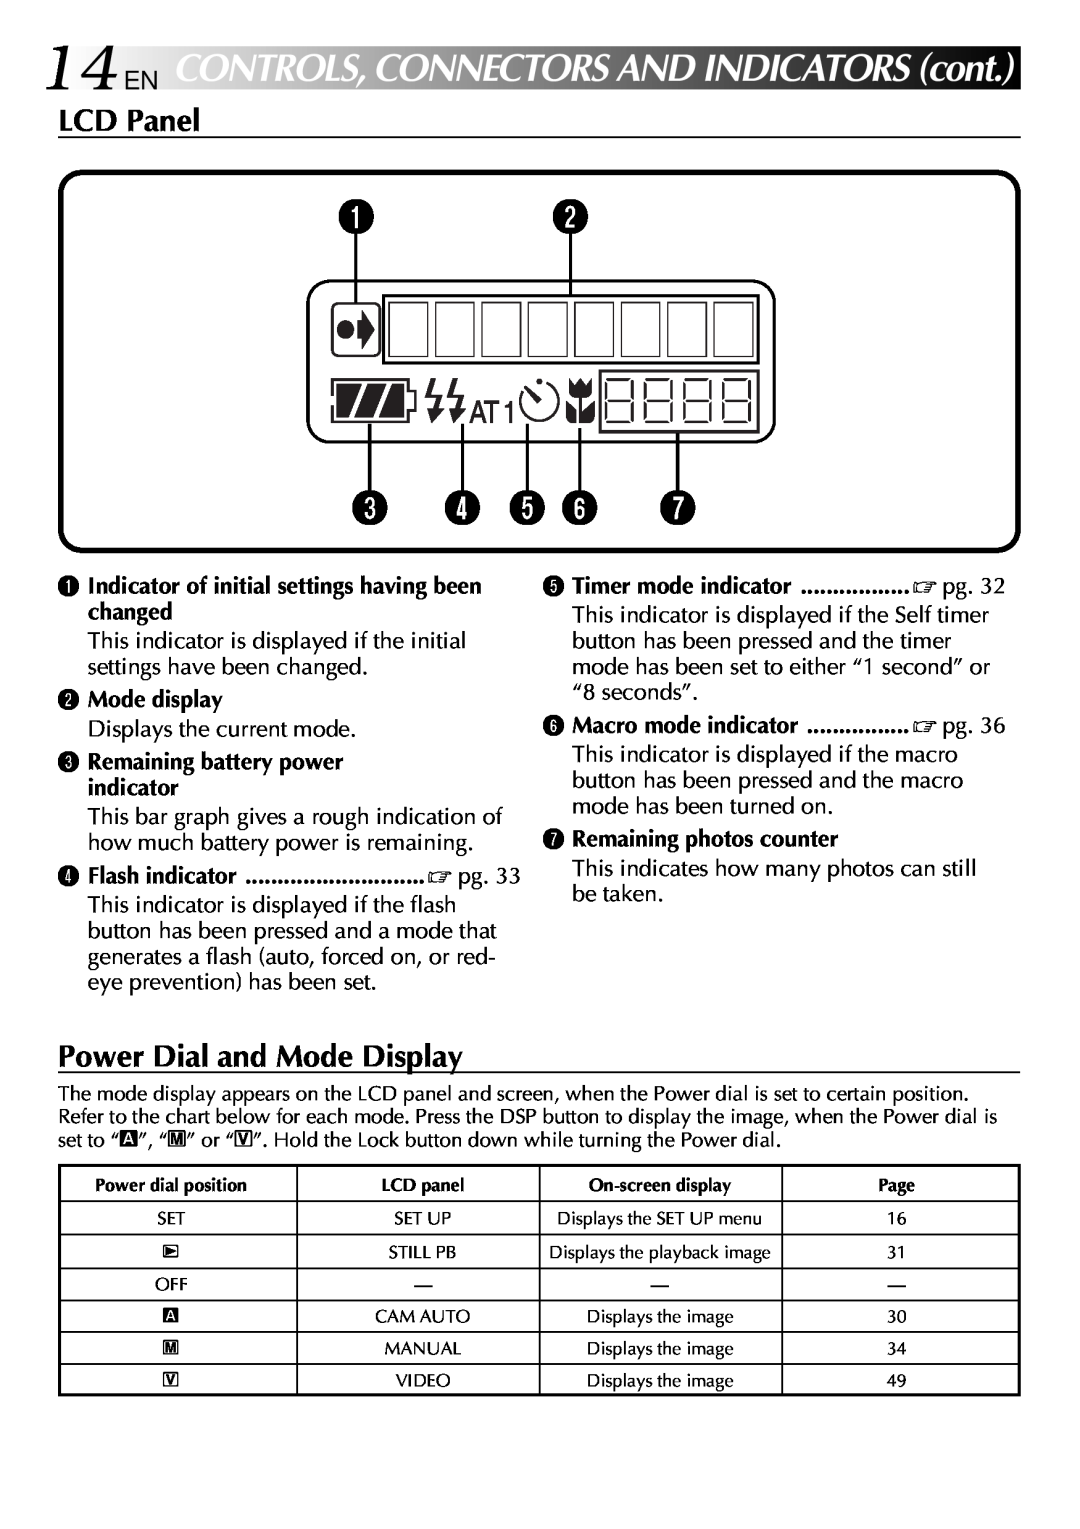 JVC GC-QX3 manual 14EN, 3 4 5 6, LCD Panel, Power Dial and Mode Display, CONTROLS,CONNECTORSANDINDICATORScont 